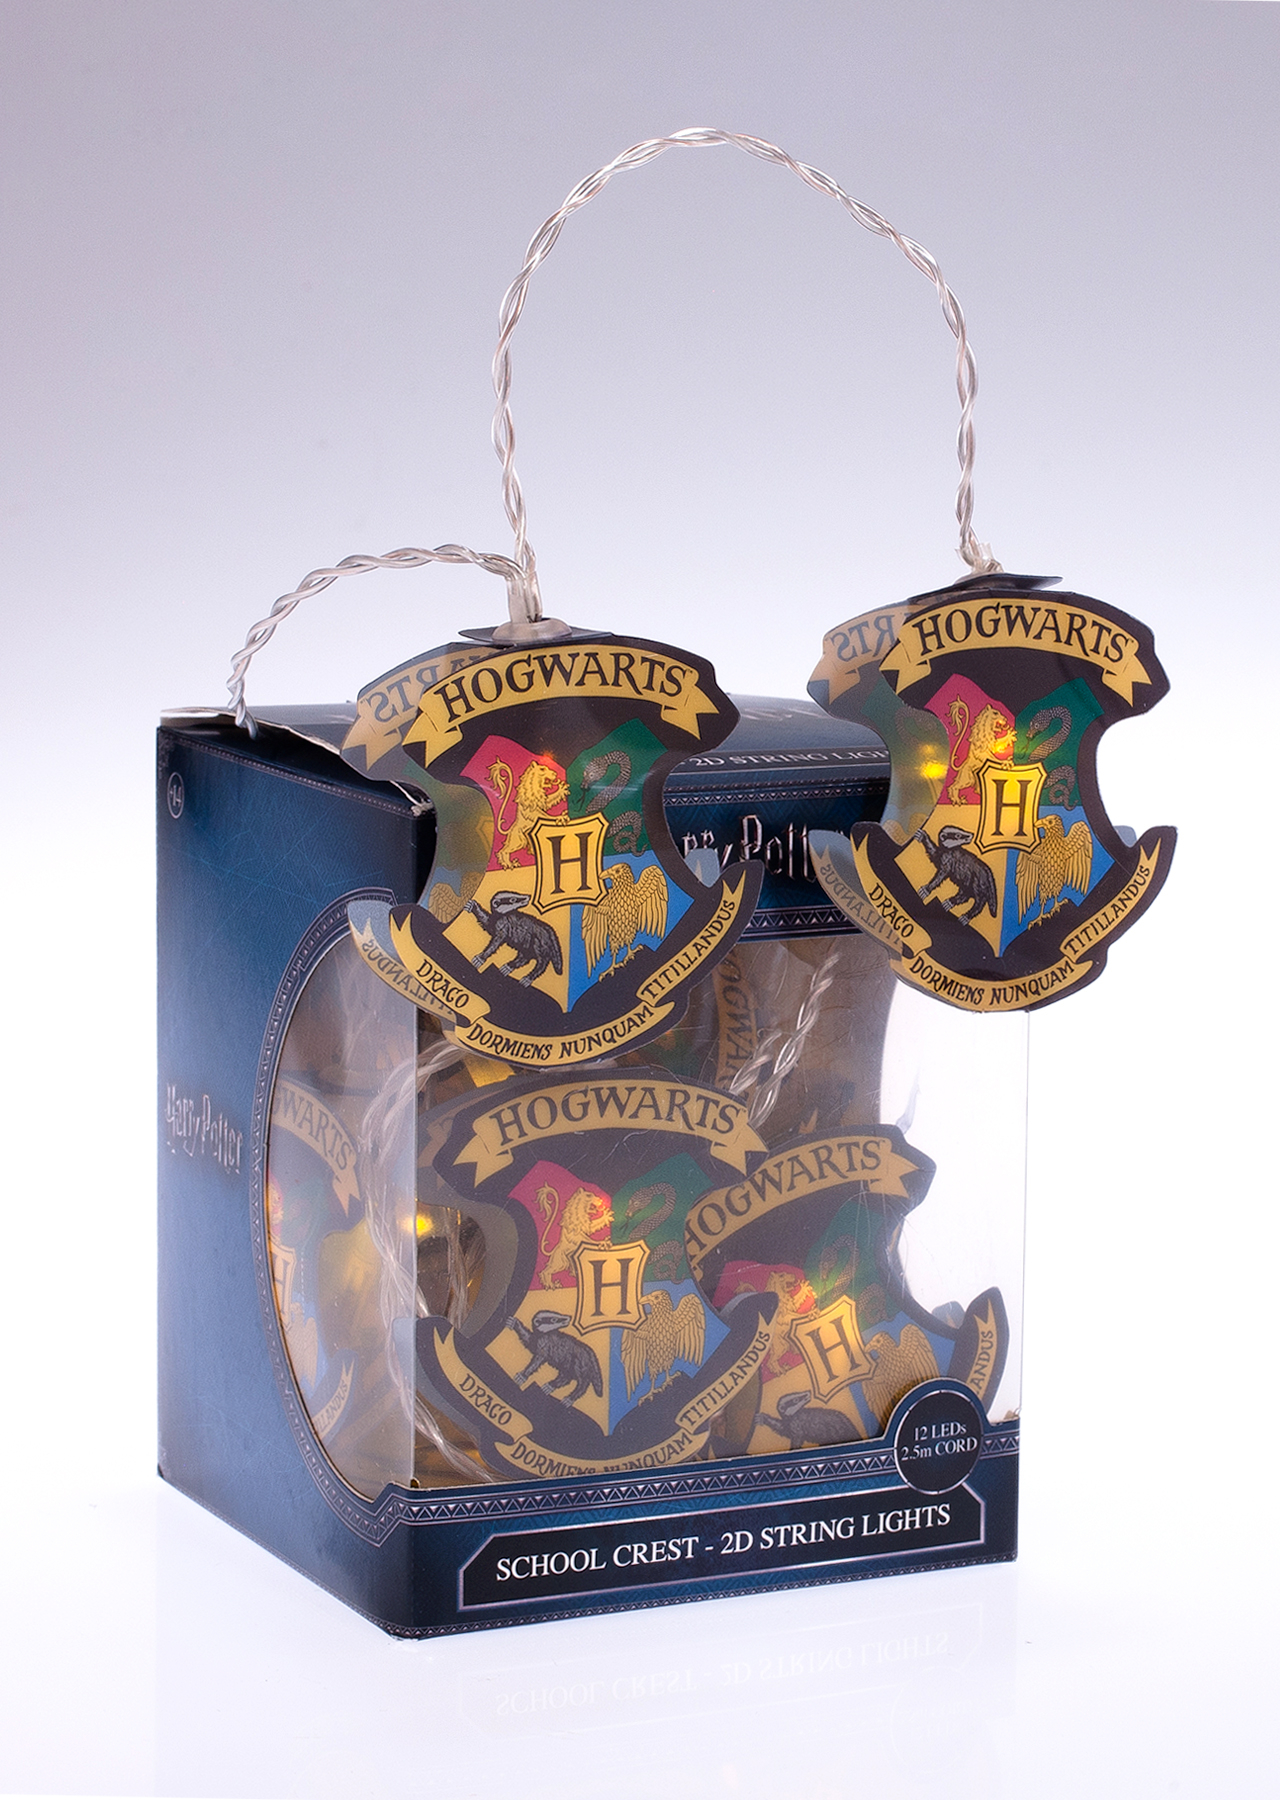 Guirlande de fanions Harry Potter personnalisable multicolore